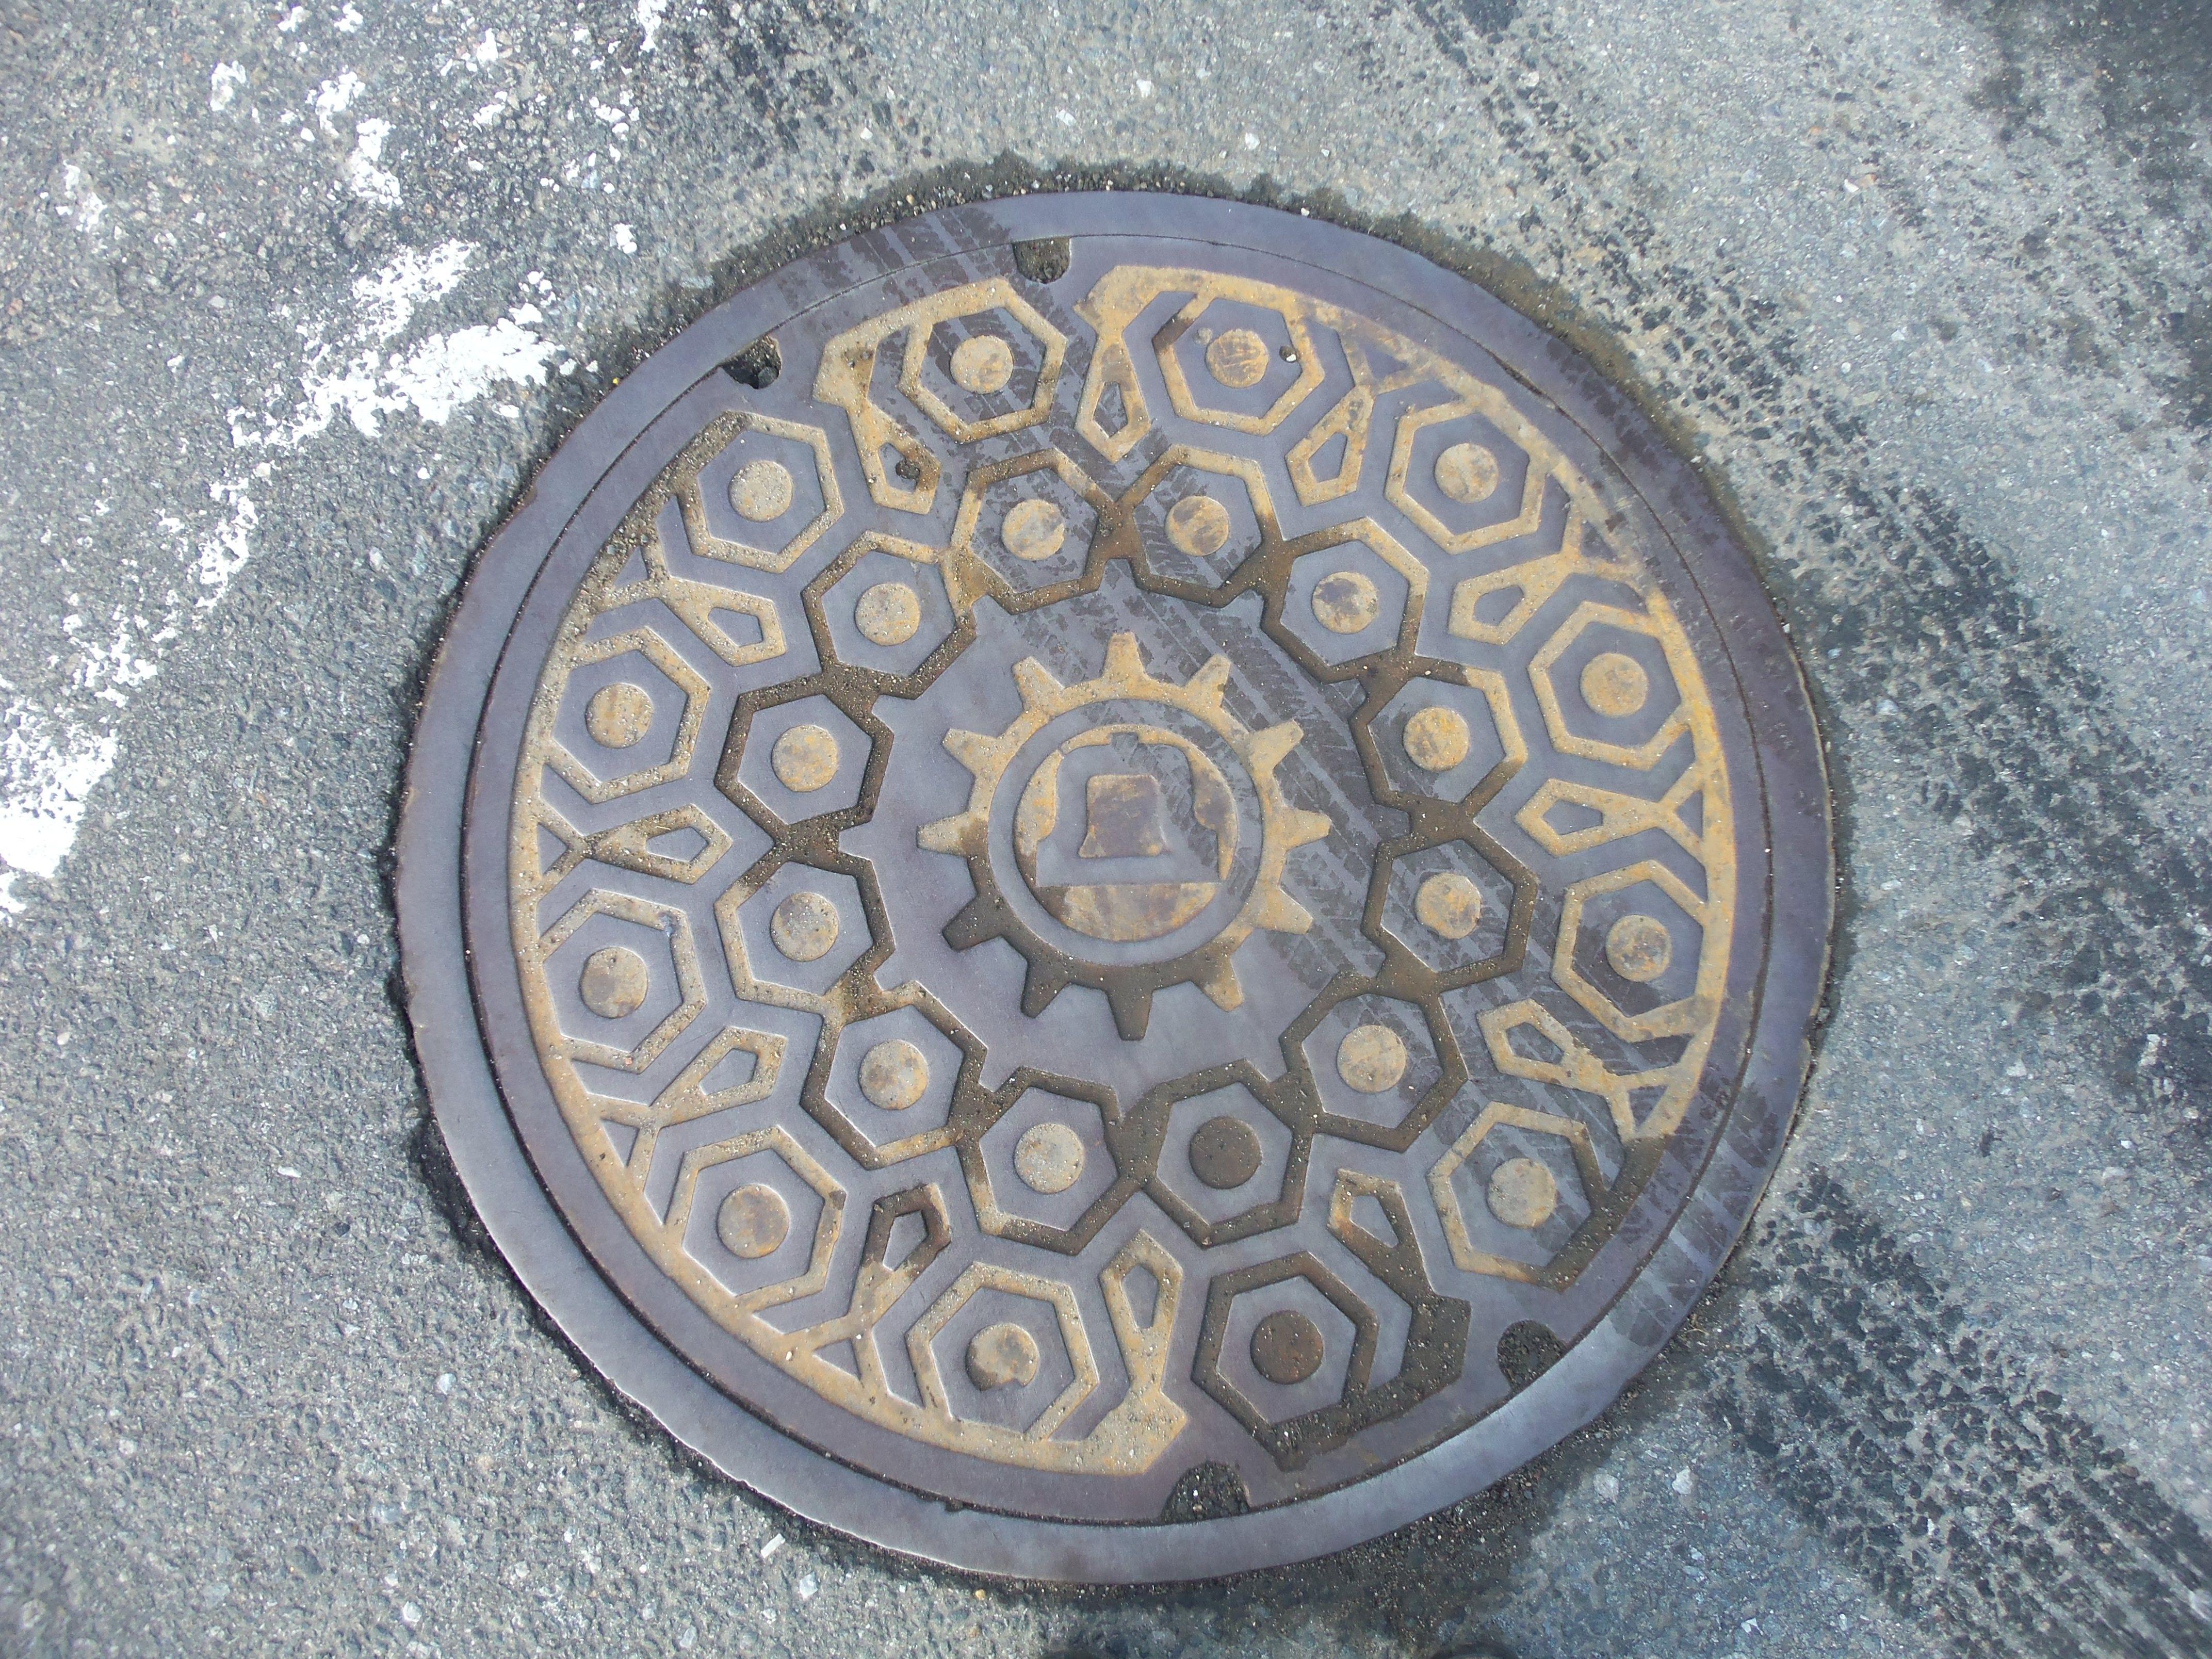 Manhole Logo - NYC manhole cover